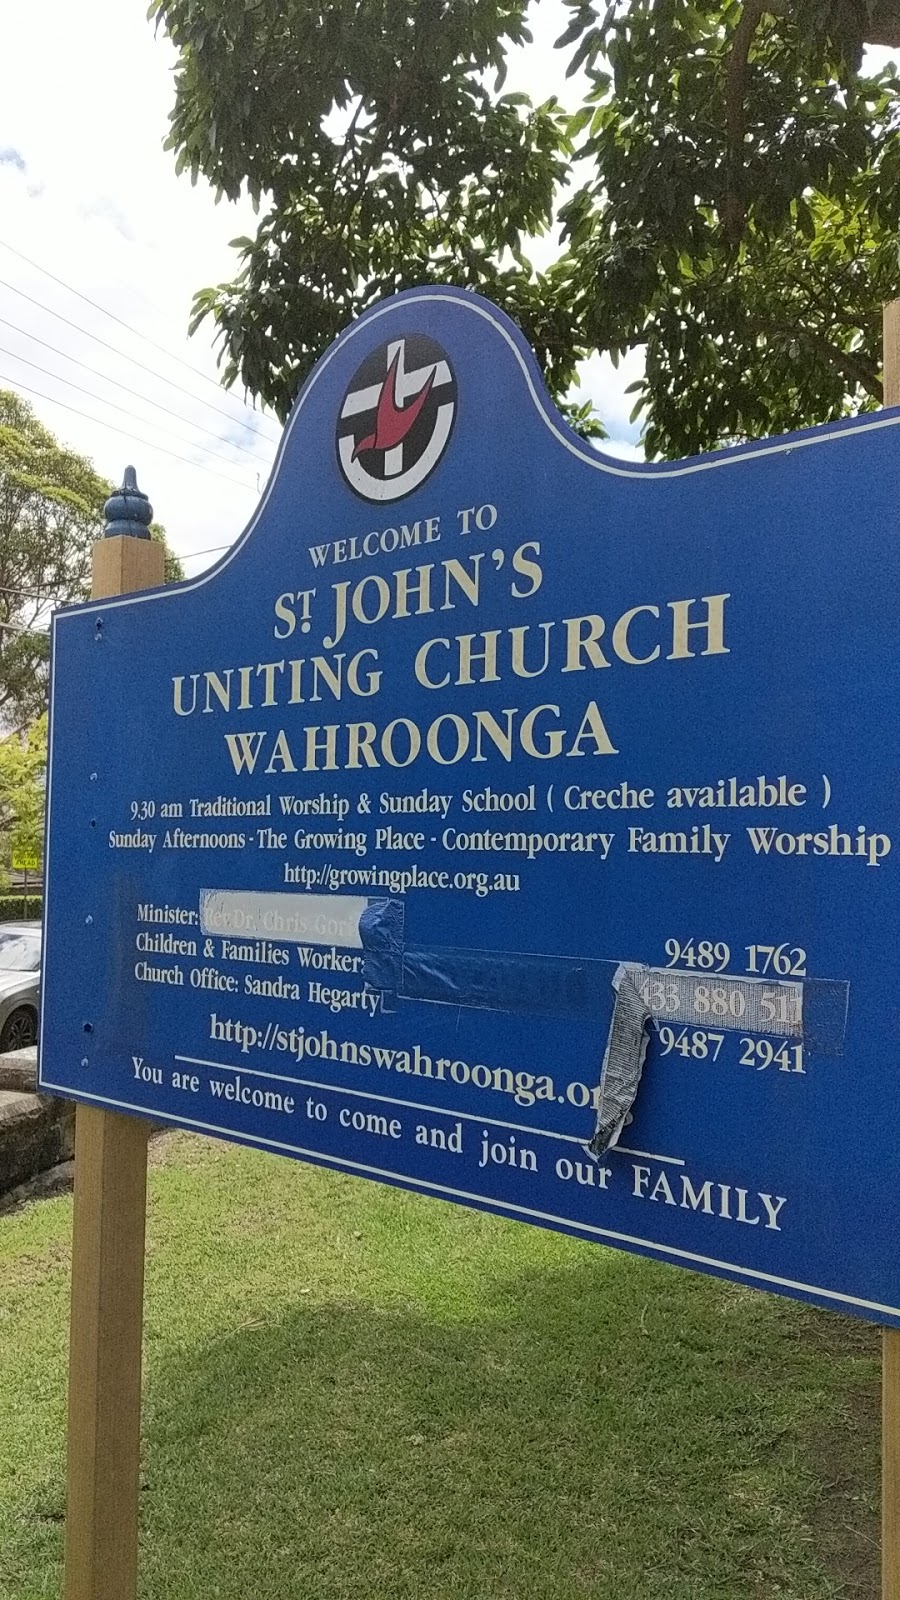 St Johns Uniting Church, Wahroonga | church | 13 Stuart St, Wahroonga NSW 2076, Australia | 0294891762 OR +61 2 9489 1762